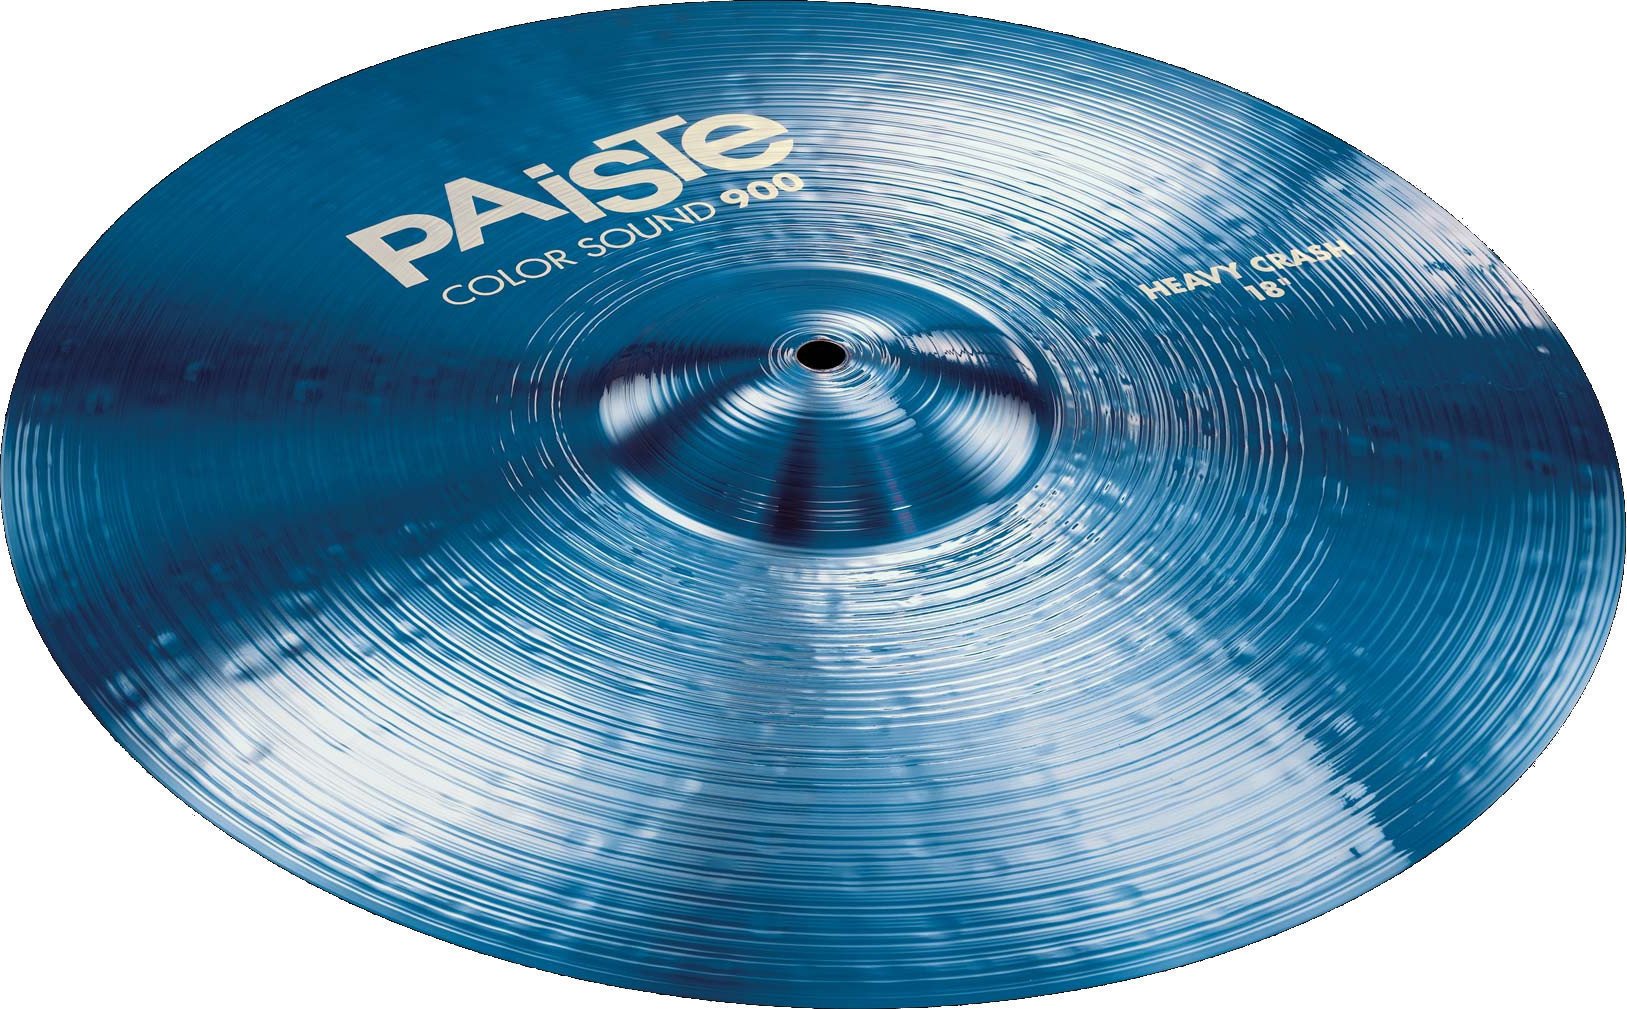 Crash Cymbal Paiste Color Sound 900  Heavy Crash Cymbal 19" Blue